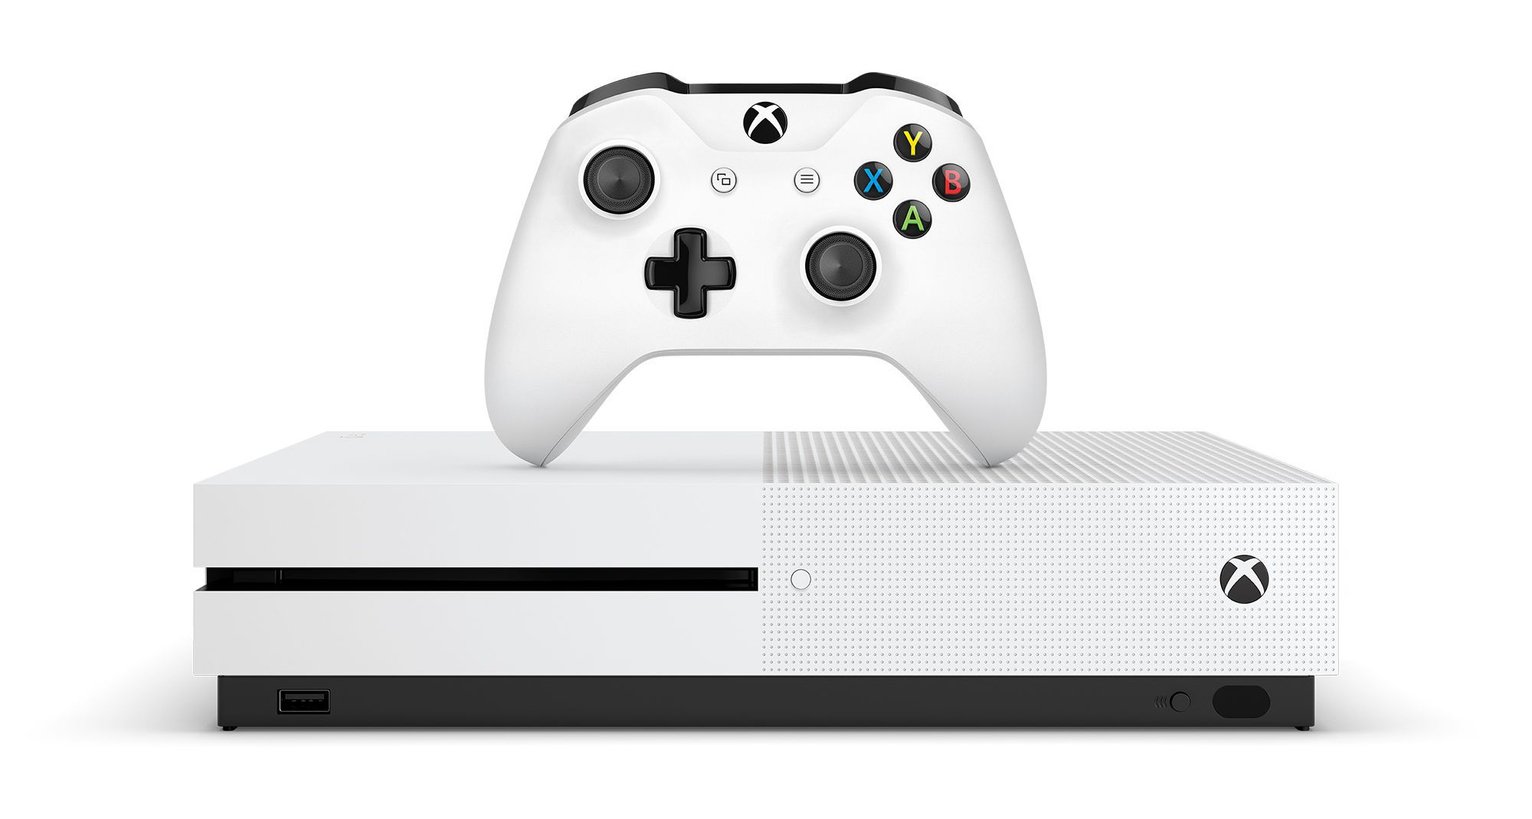 Xbox One S 1TB Console & Forza Horizon 4 LEGO Speed Bundle Review